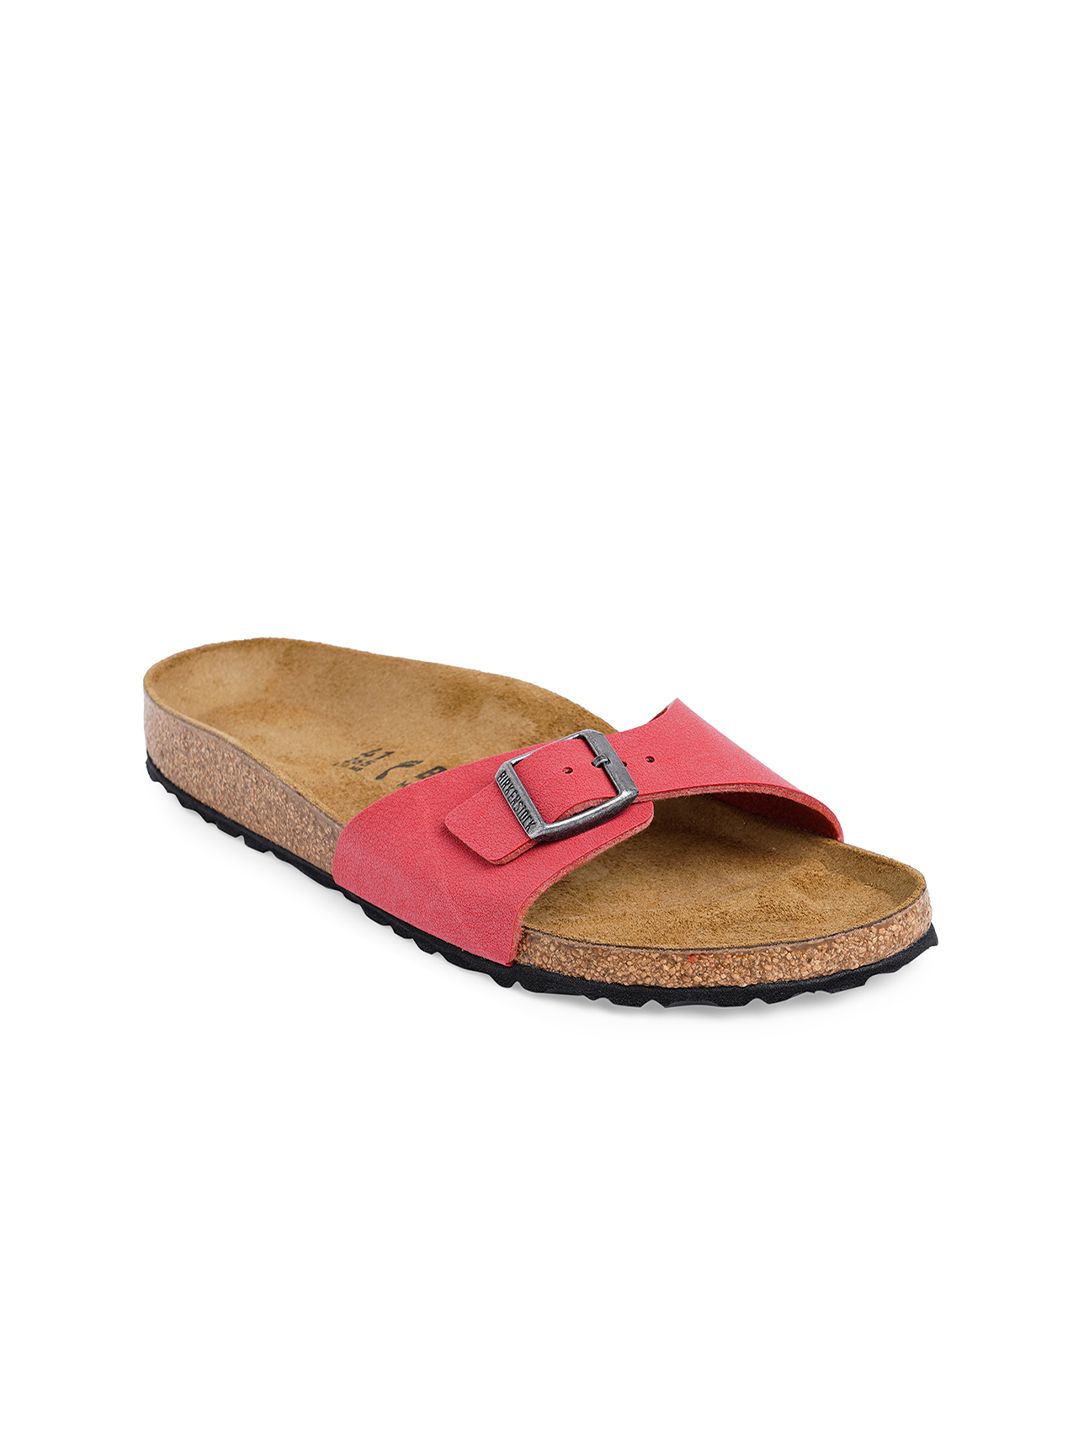 Birkenstock Unisex Scarlet Red Madrid Slide Sandals Price in India